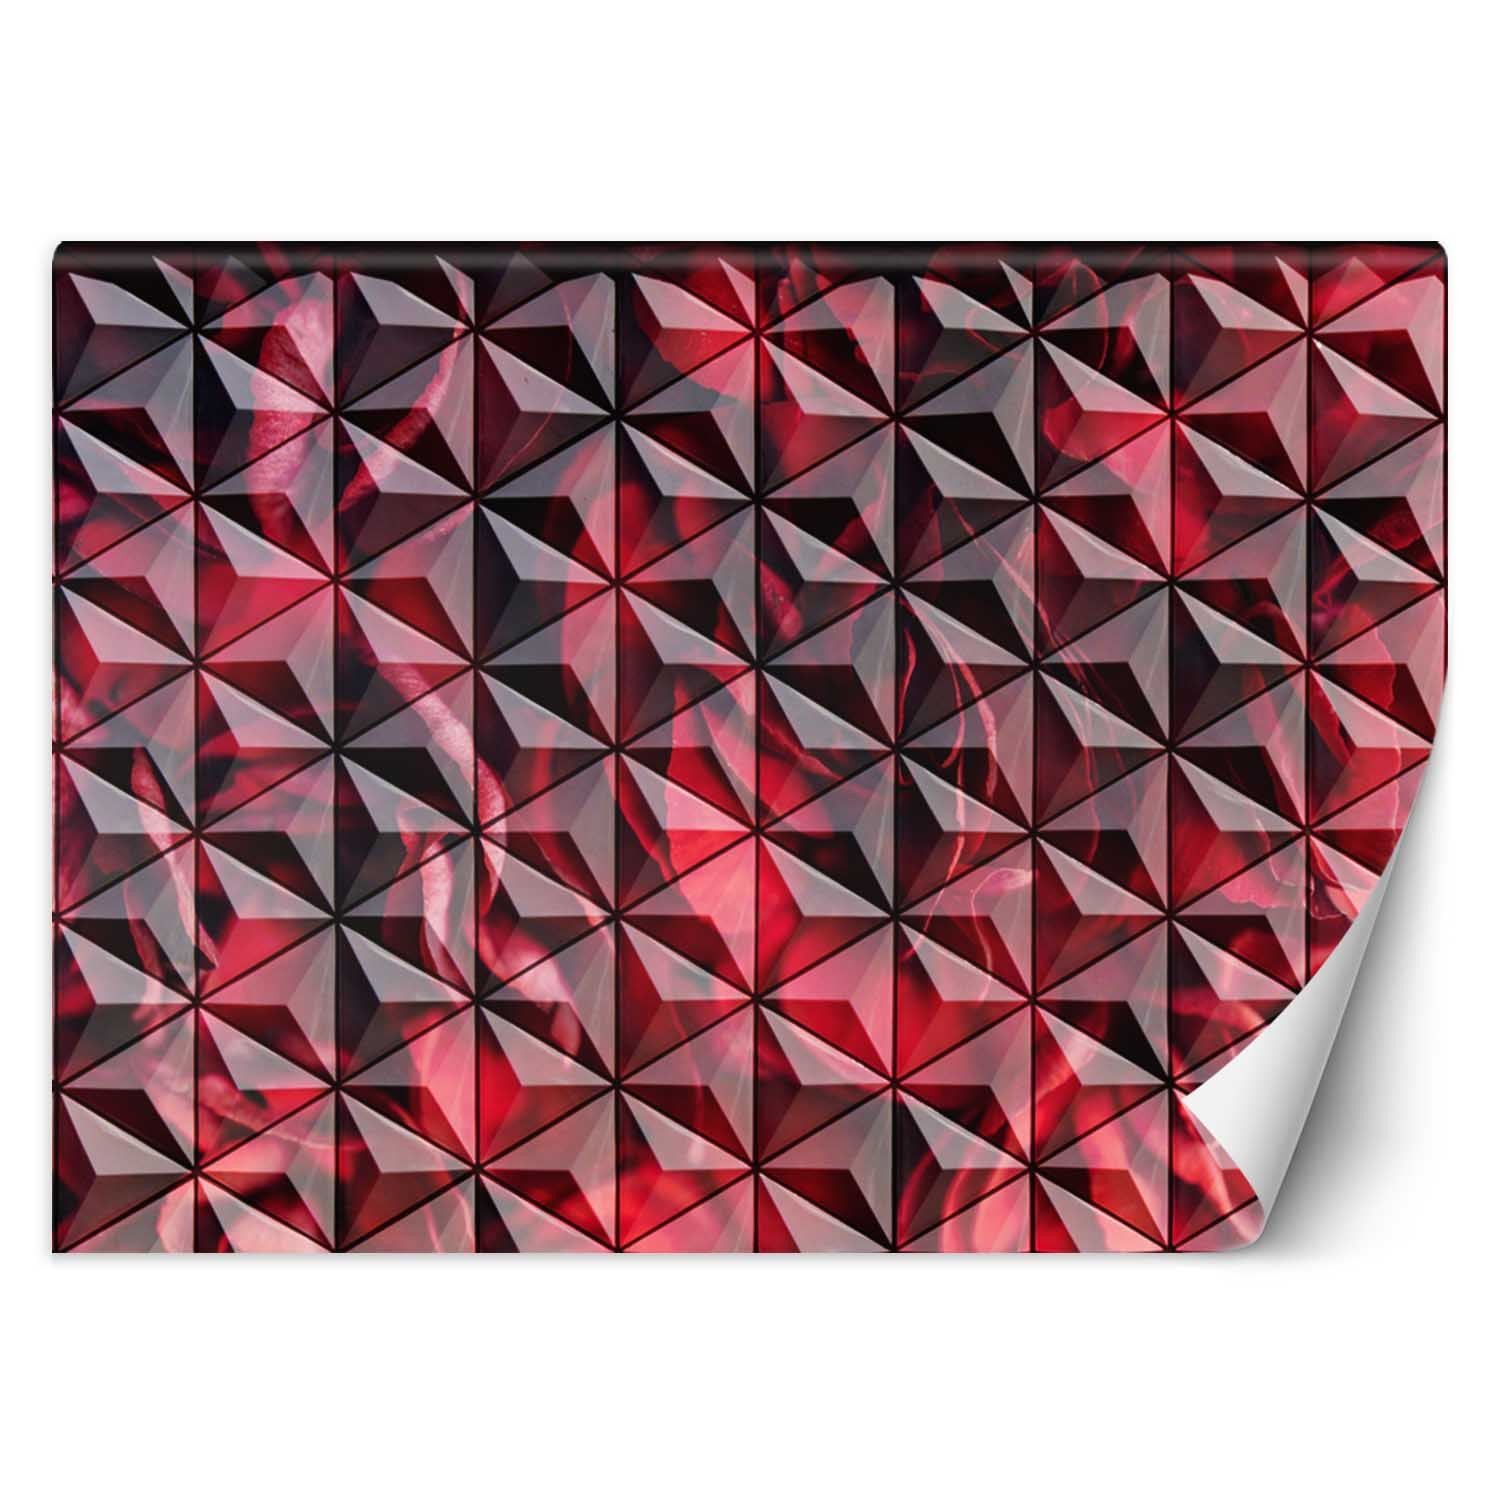 Trend24 – Behang – Rode Geometrie – Behangpapier – Behang Woonkamer – Fotobehang – 200x140x2 cm – Incl. behanglijm